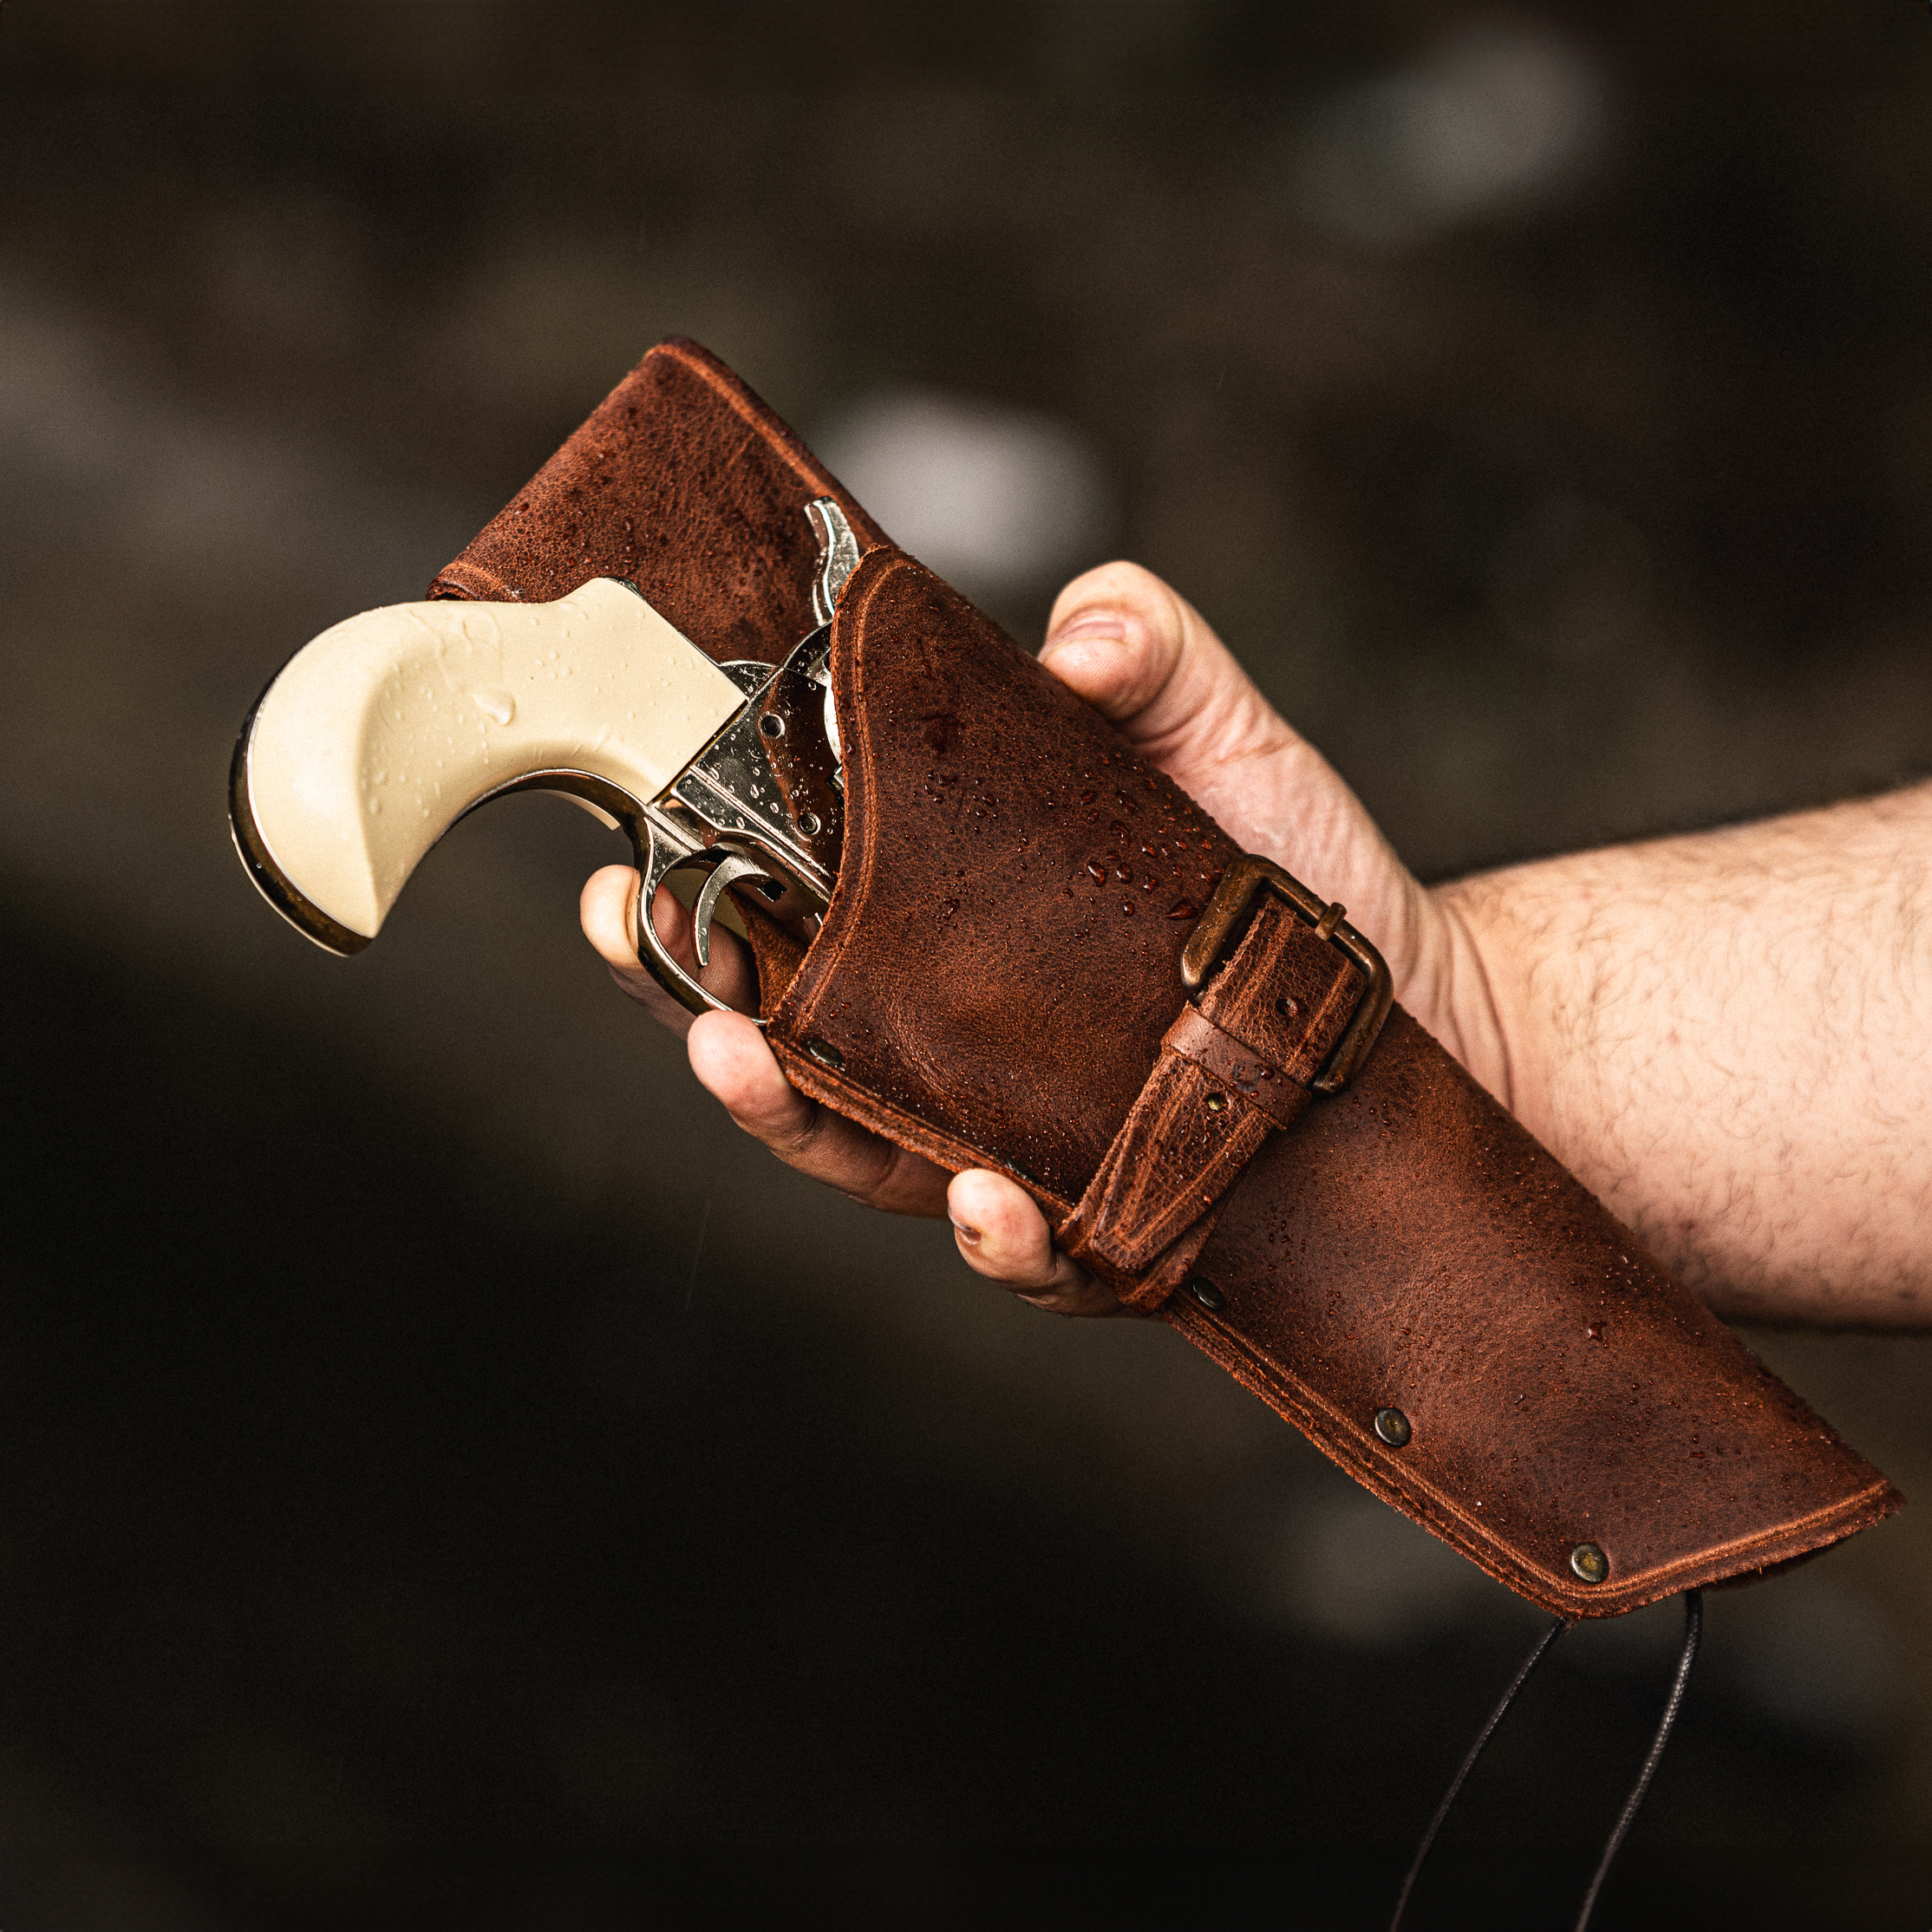 Hand holding leather Colt holster with pearl handled Thunderer revolver inside